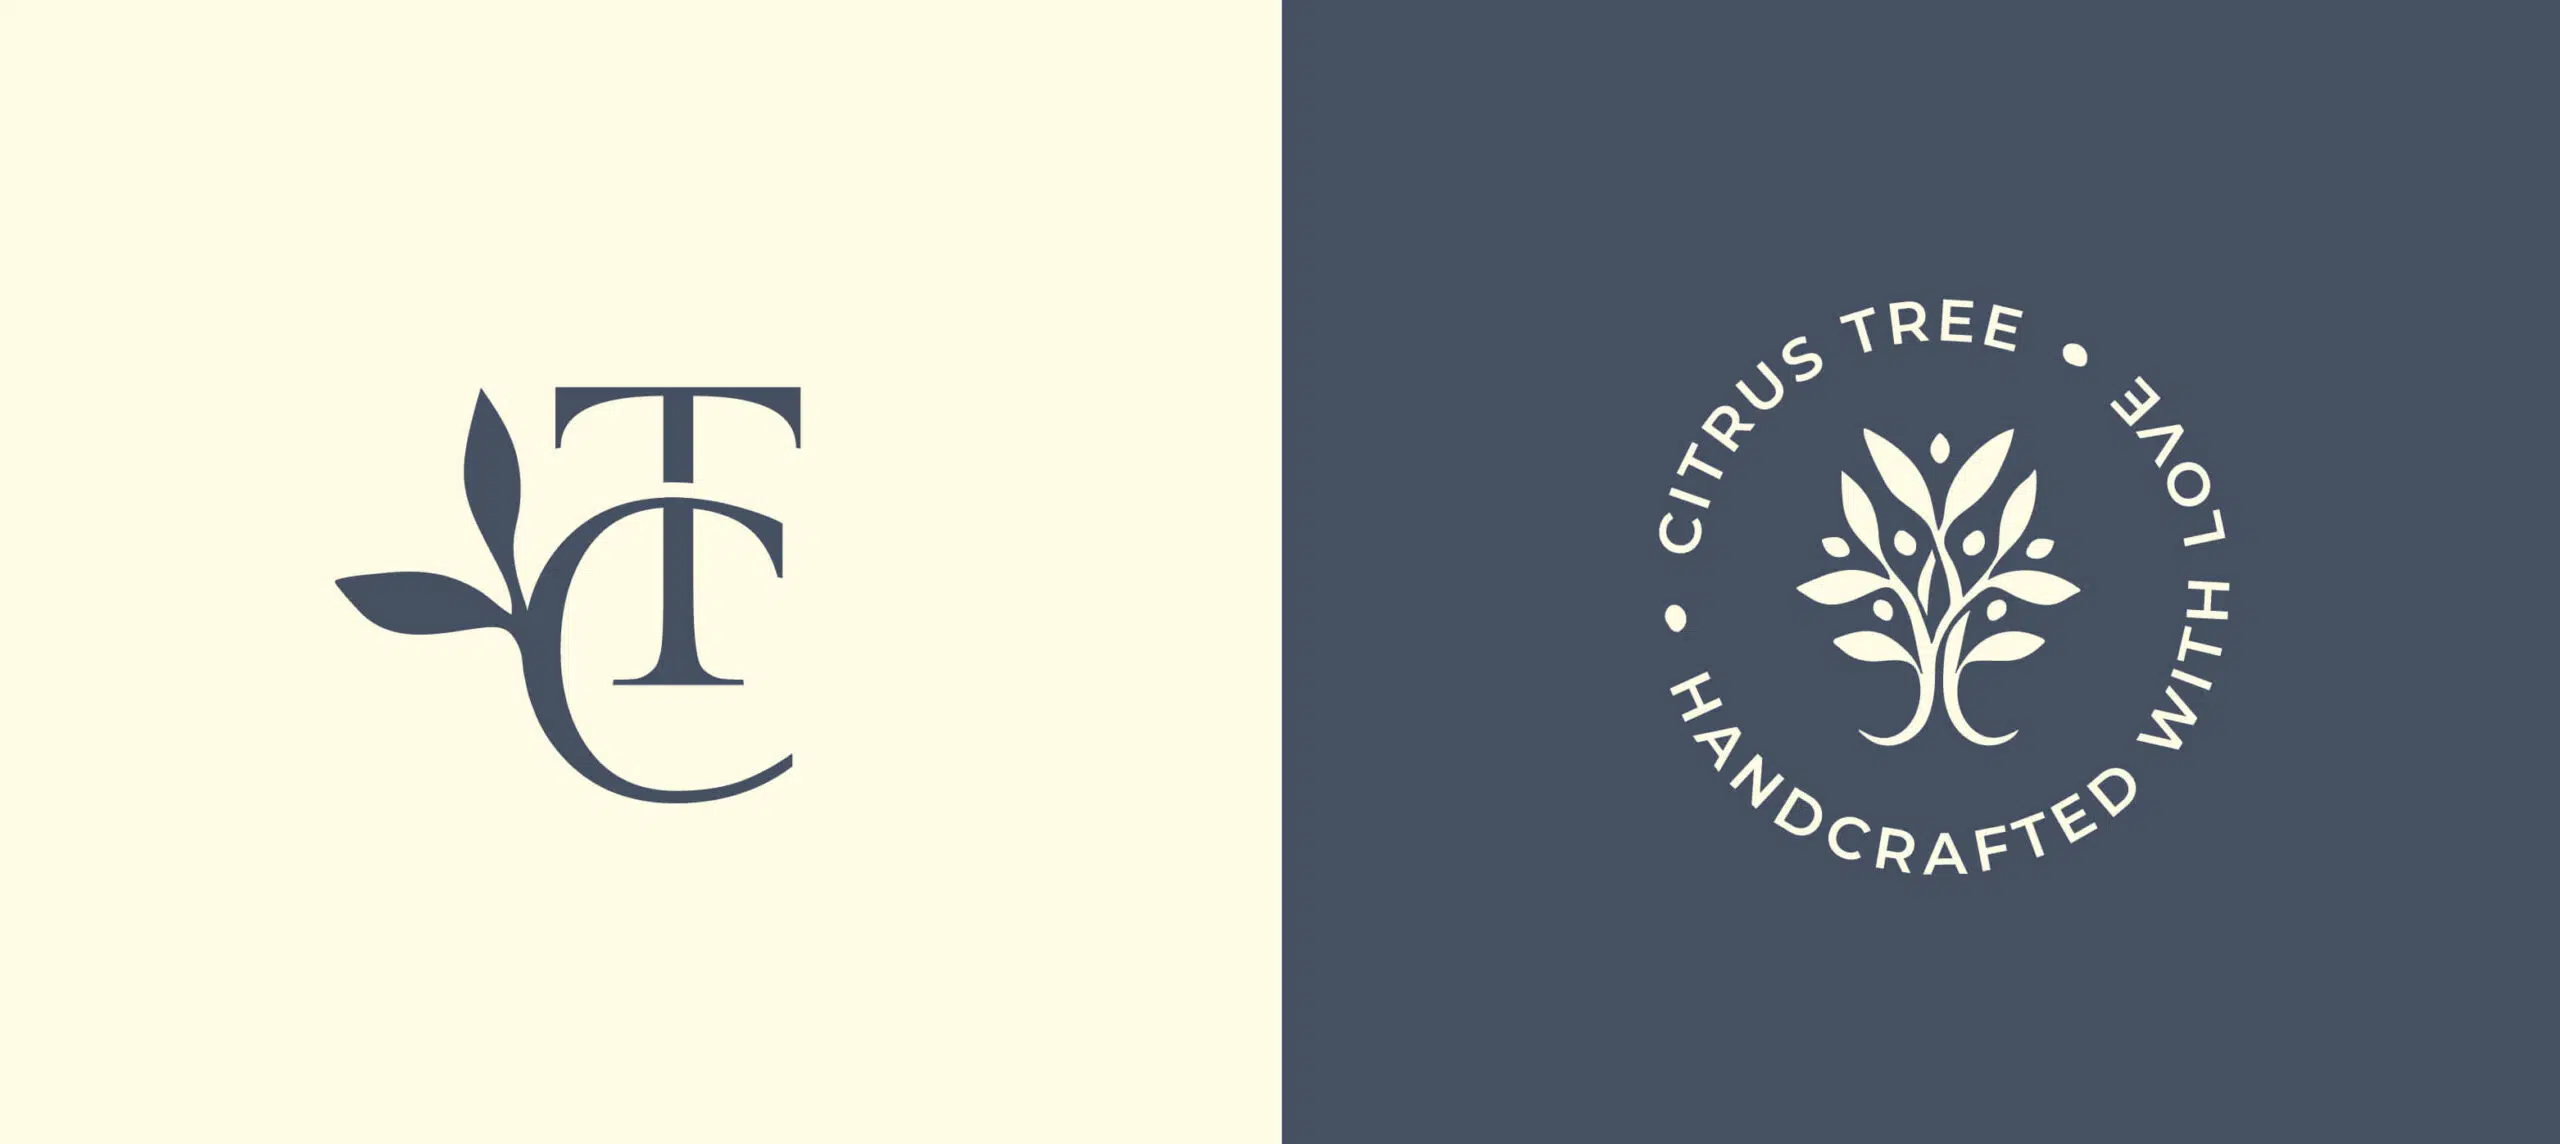 logo design variations for candle brand